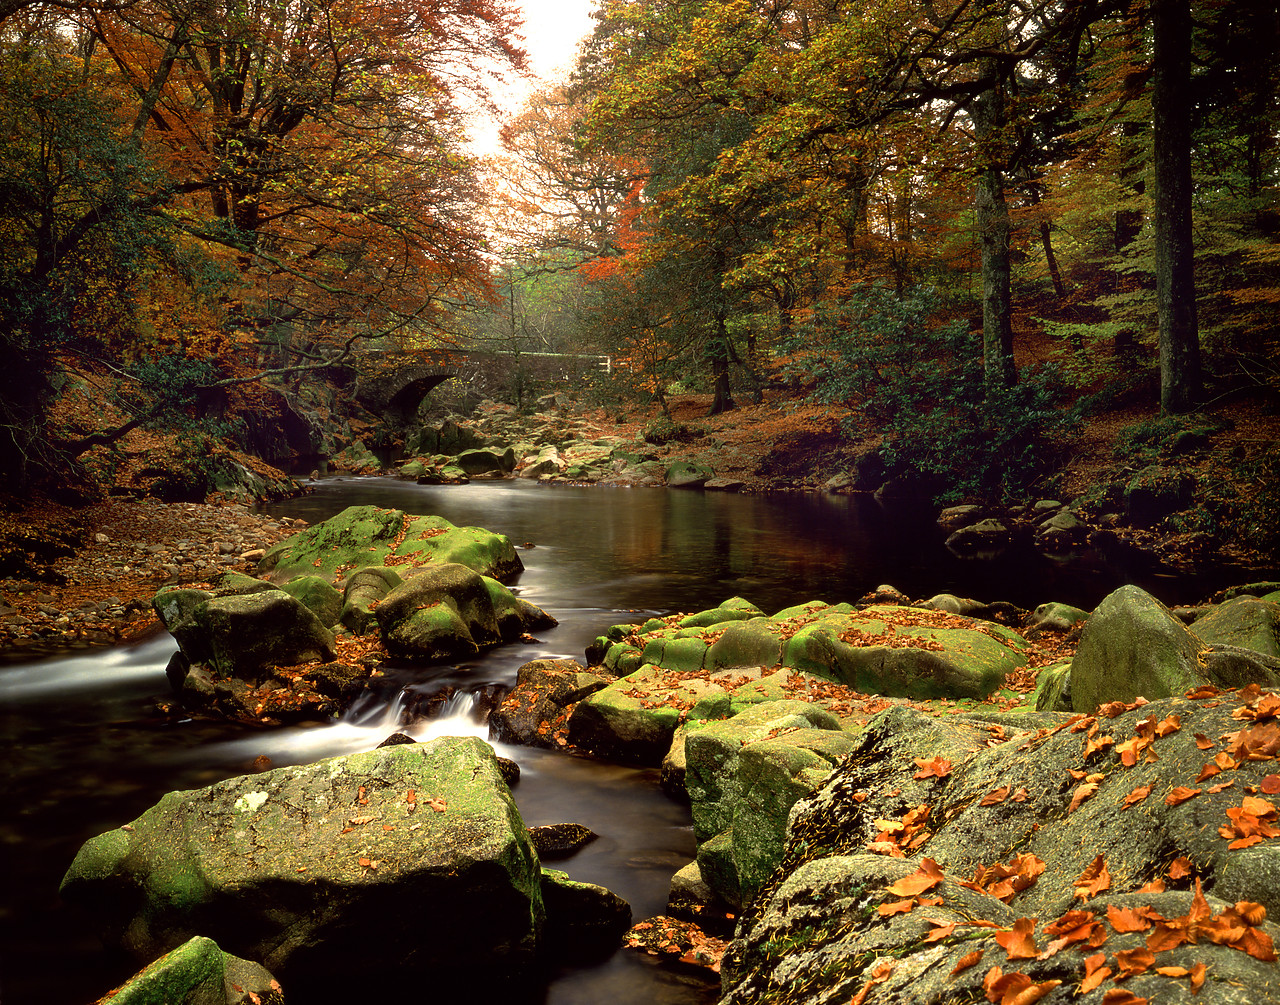 #871155-1 - River Esk in Autumn, Near Boot, Cumbria, England